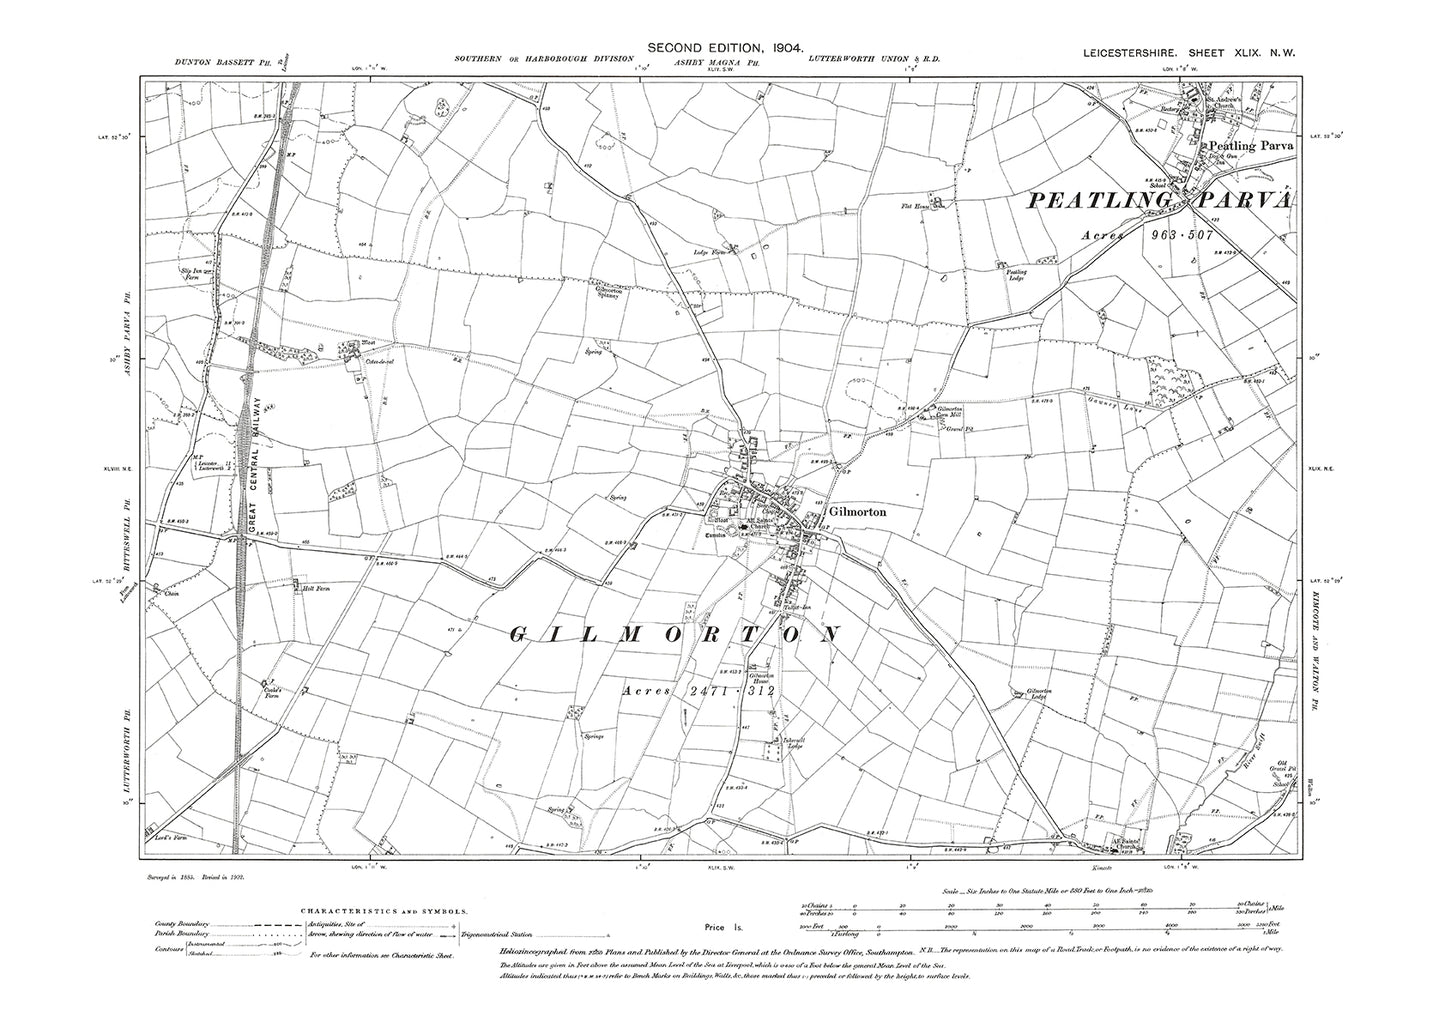 Gilmorton, Peatling Parva (south) - Leicestershire in 1904 : 49NW